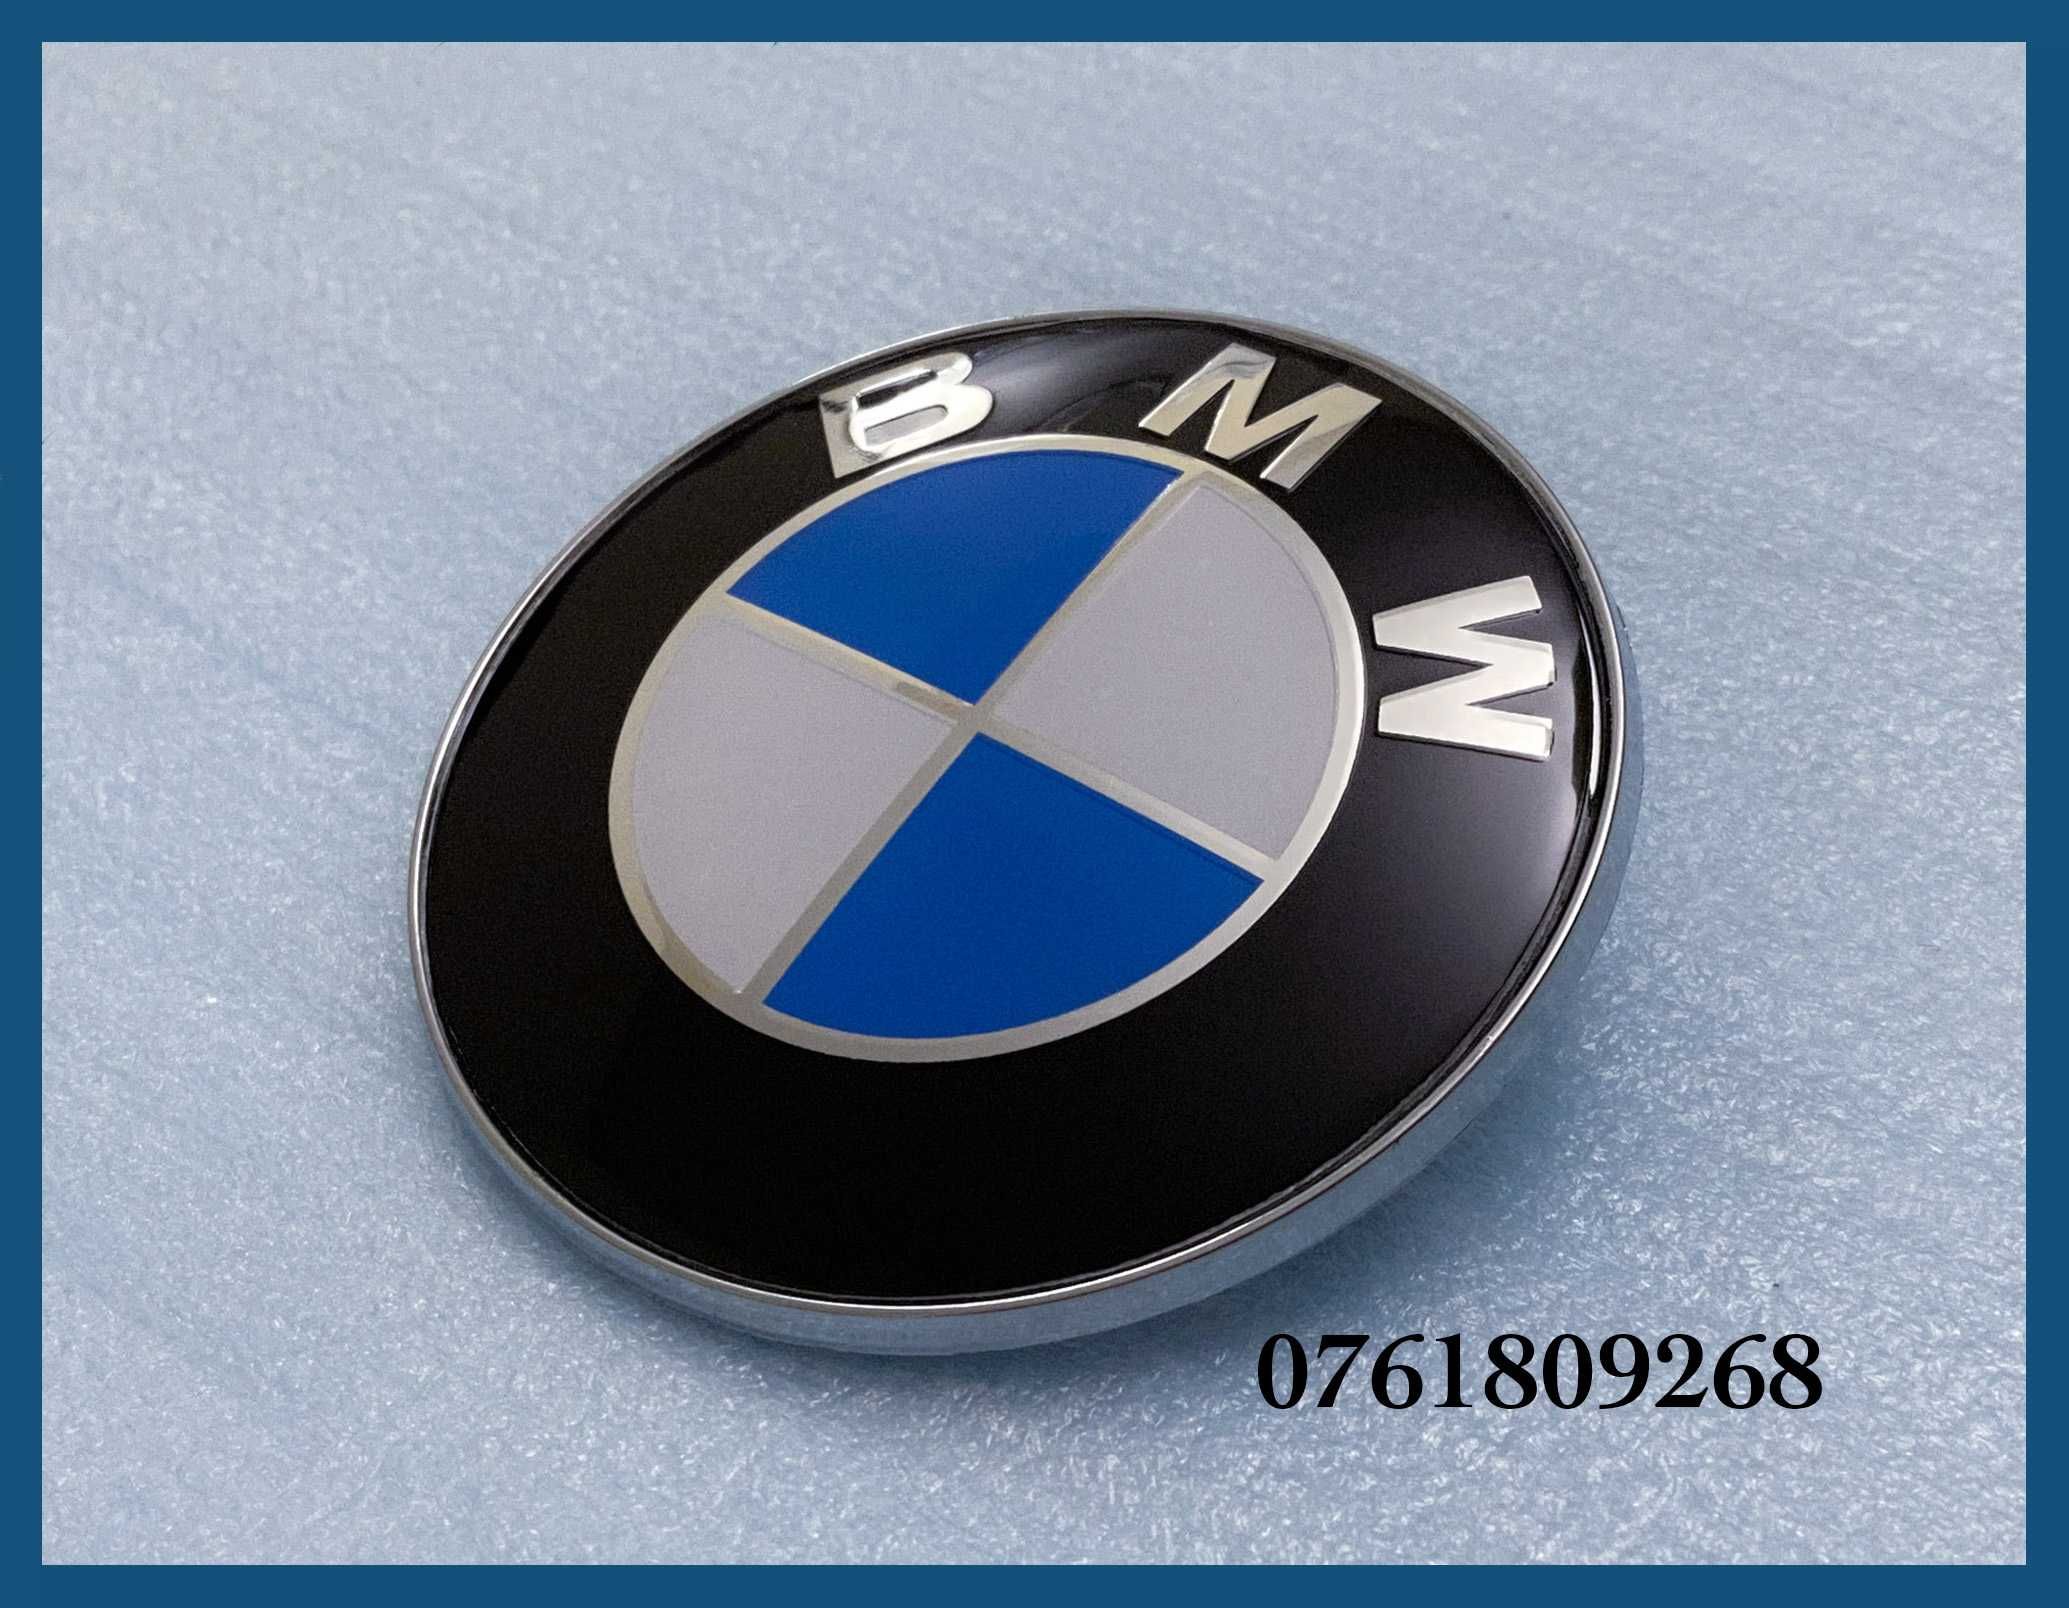 Emblema logo BMW pentru capota / portbagaj 82mm